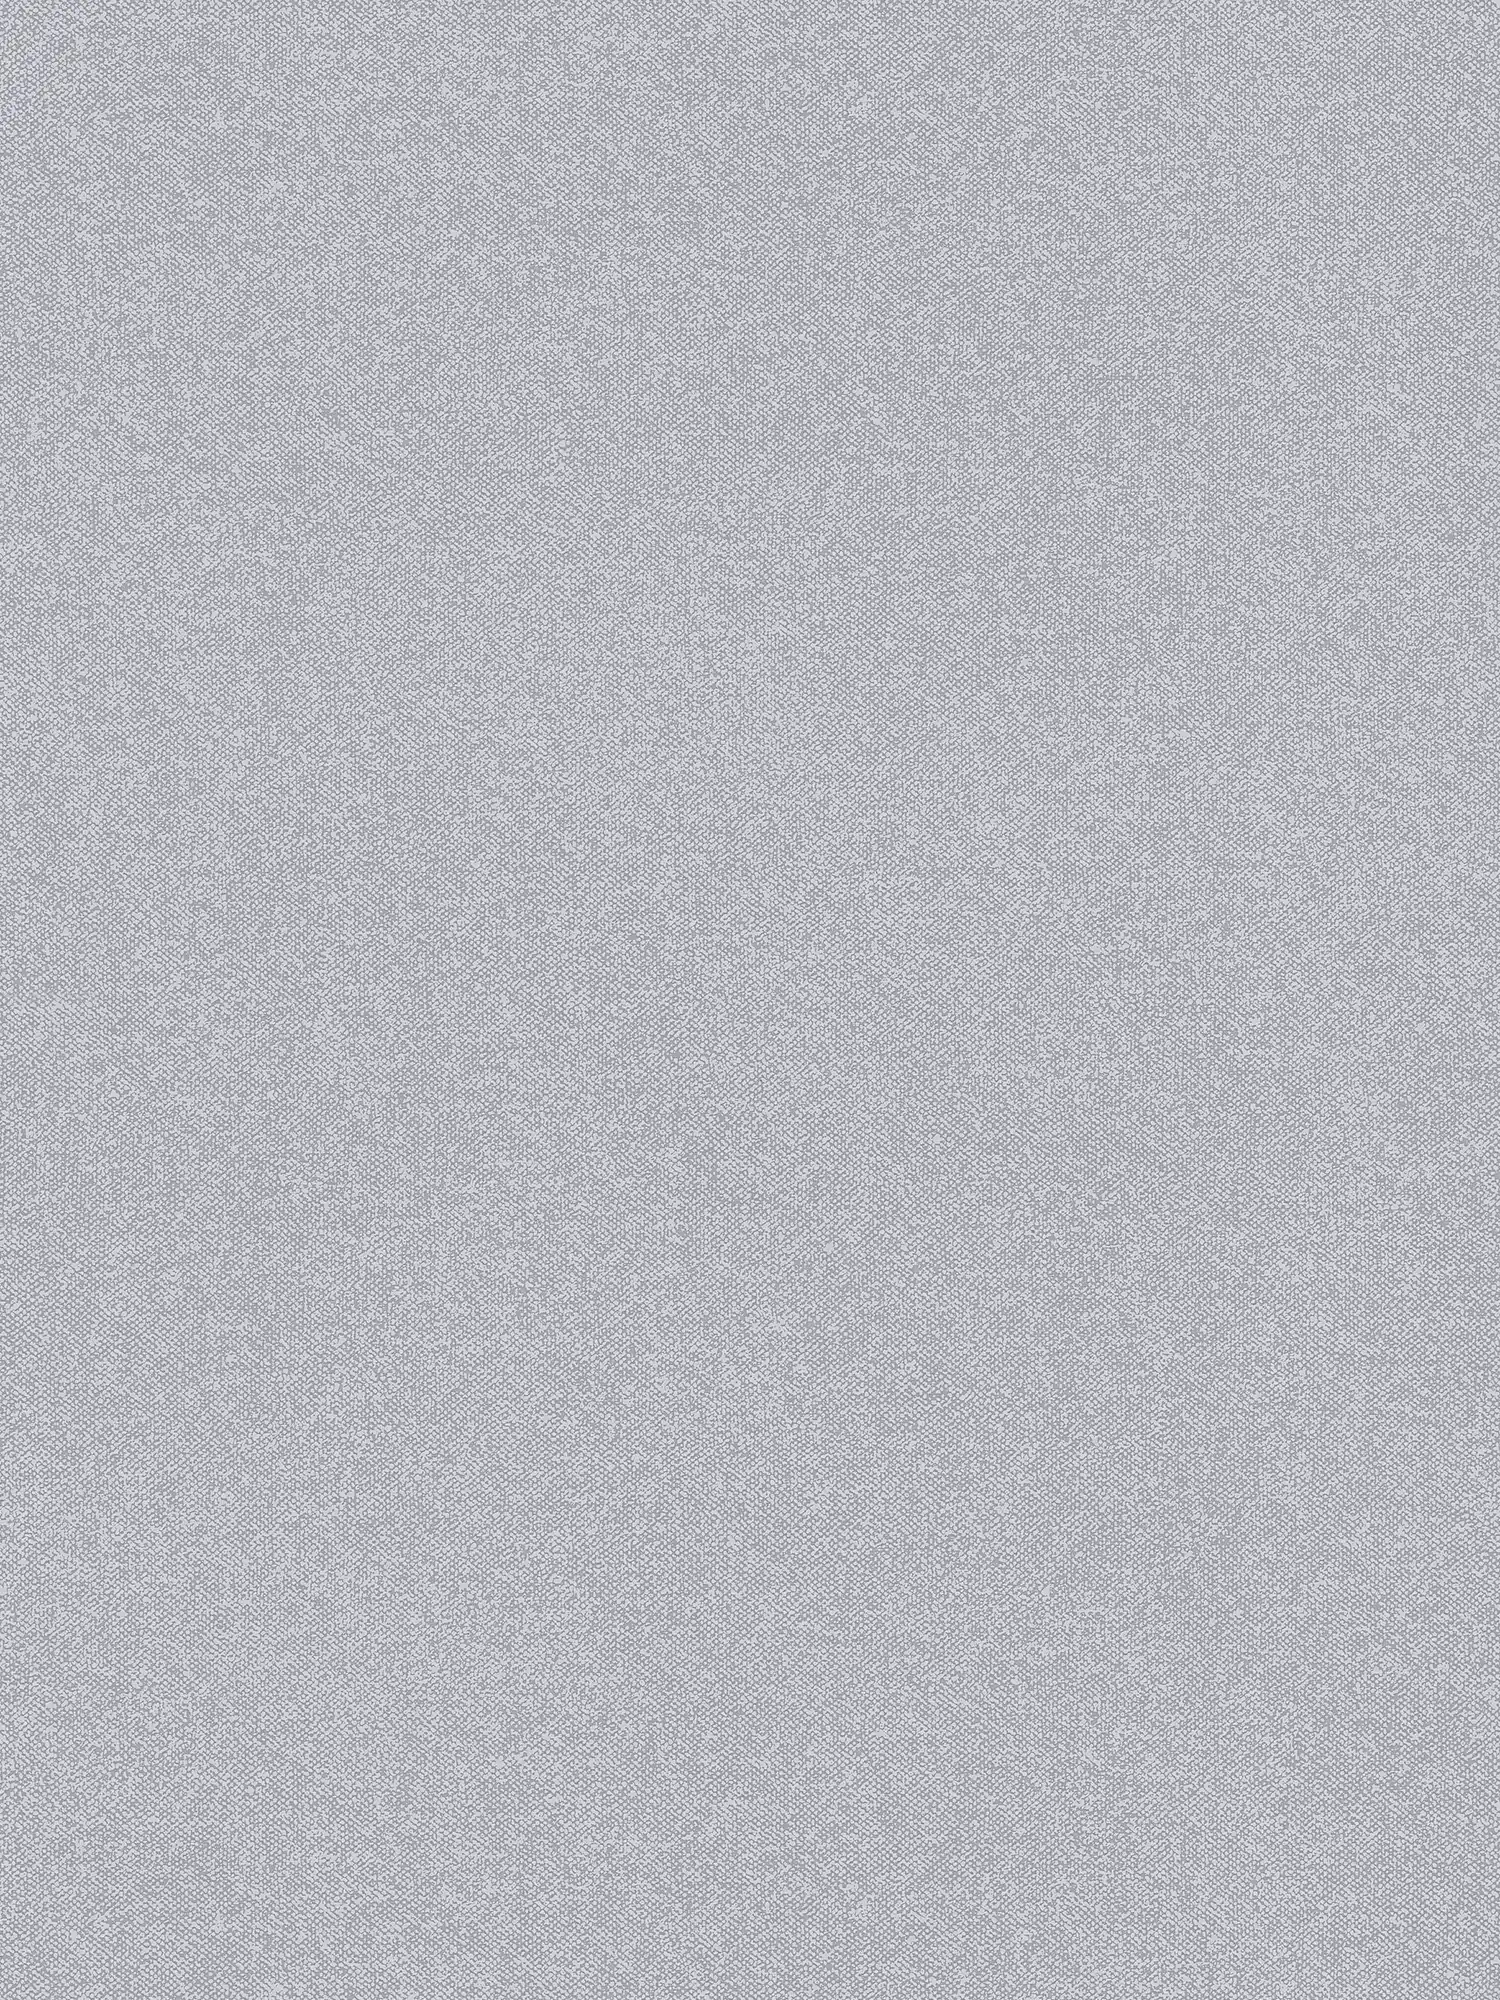 Plain wallpaper with linen look, textured - blue, grey
